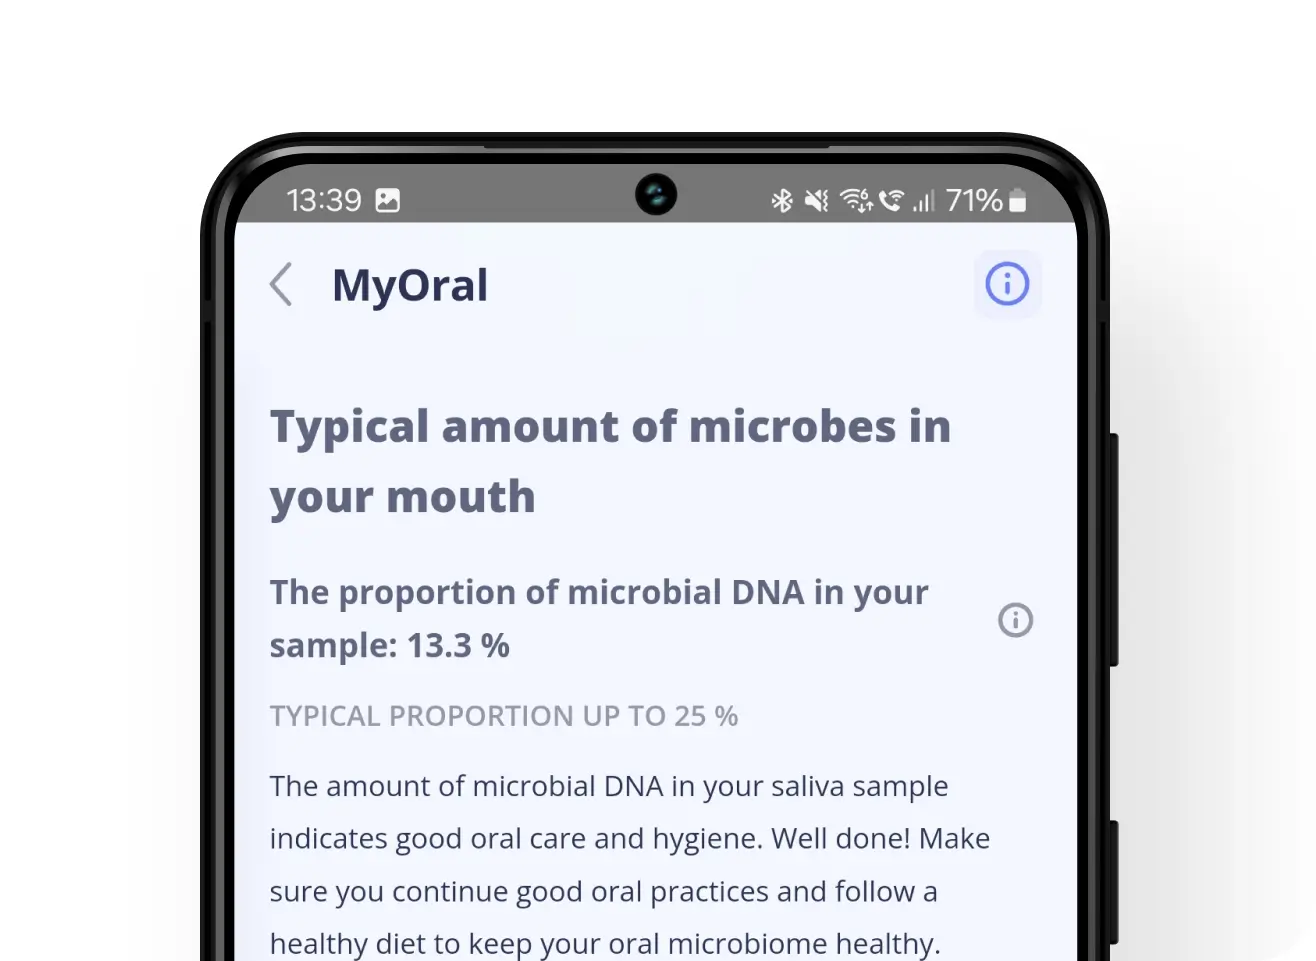 Raport microbiom oral